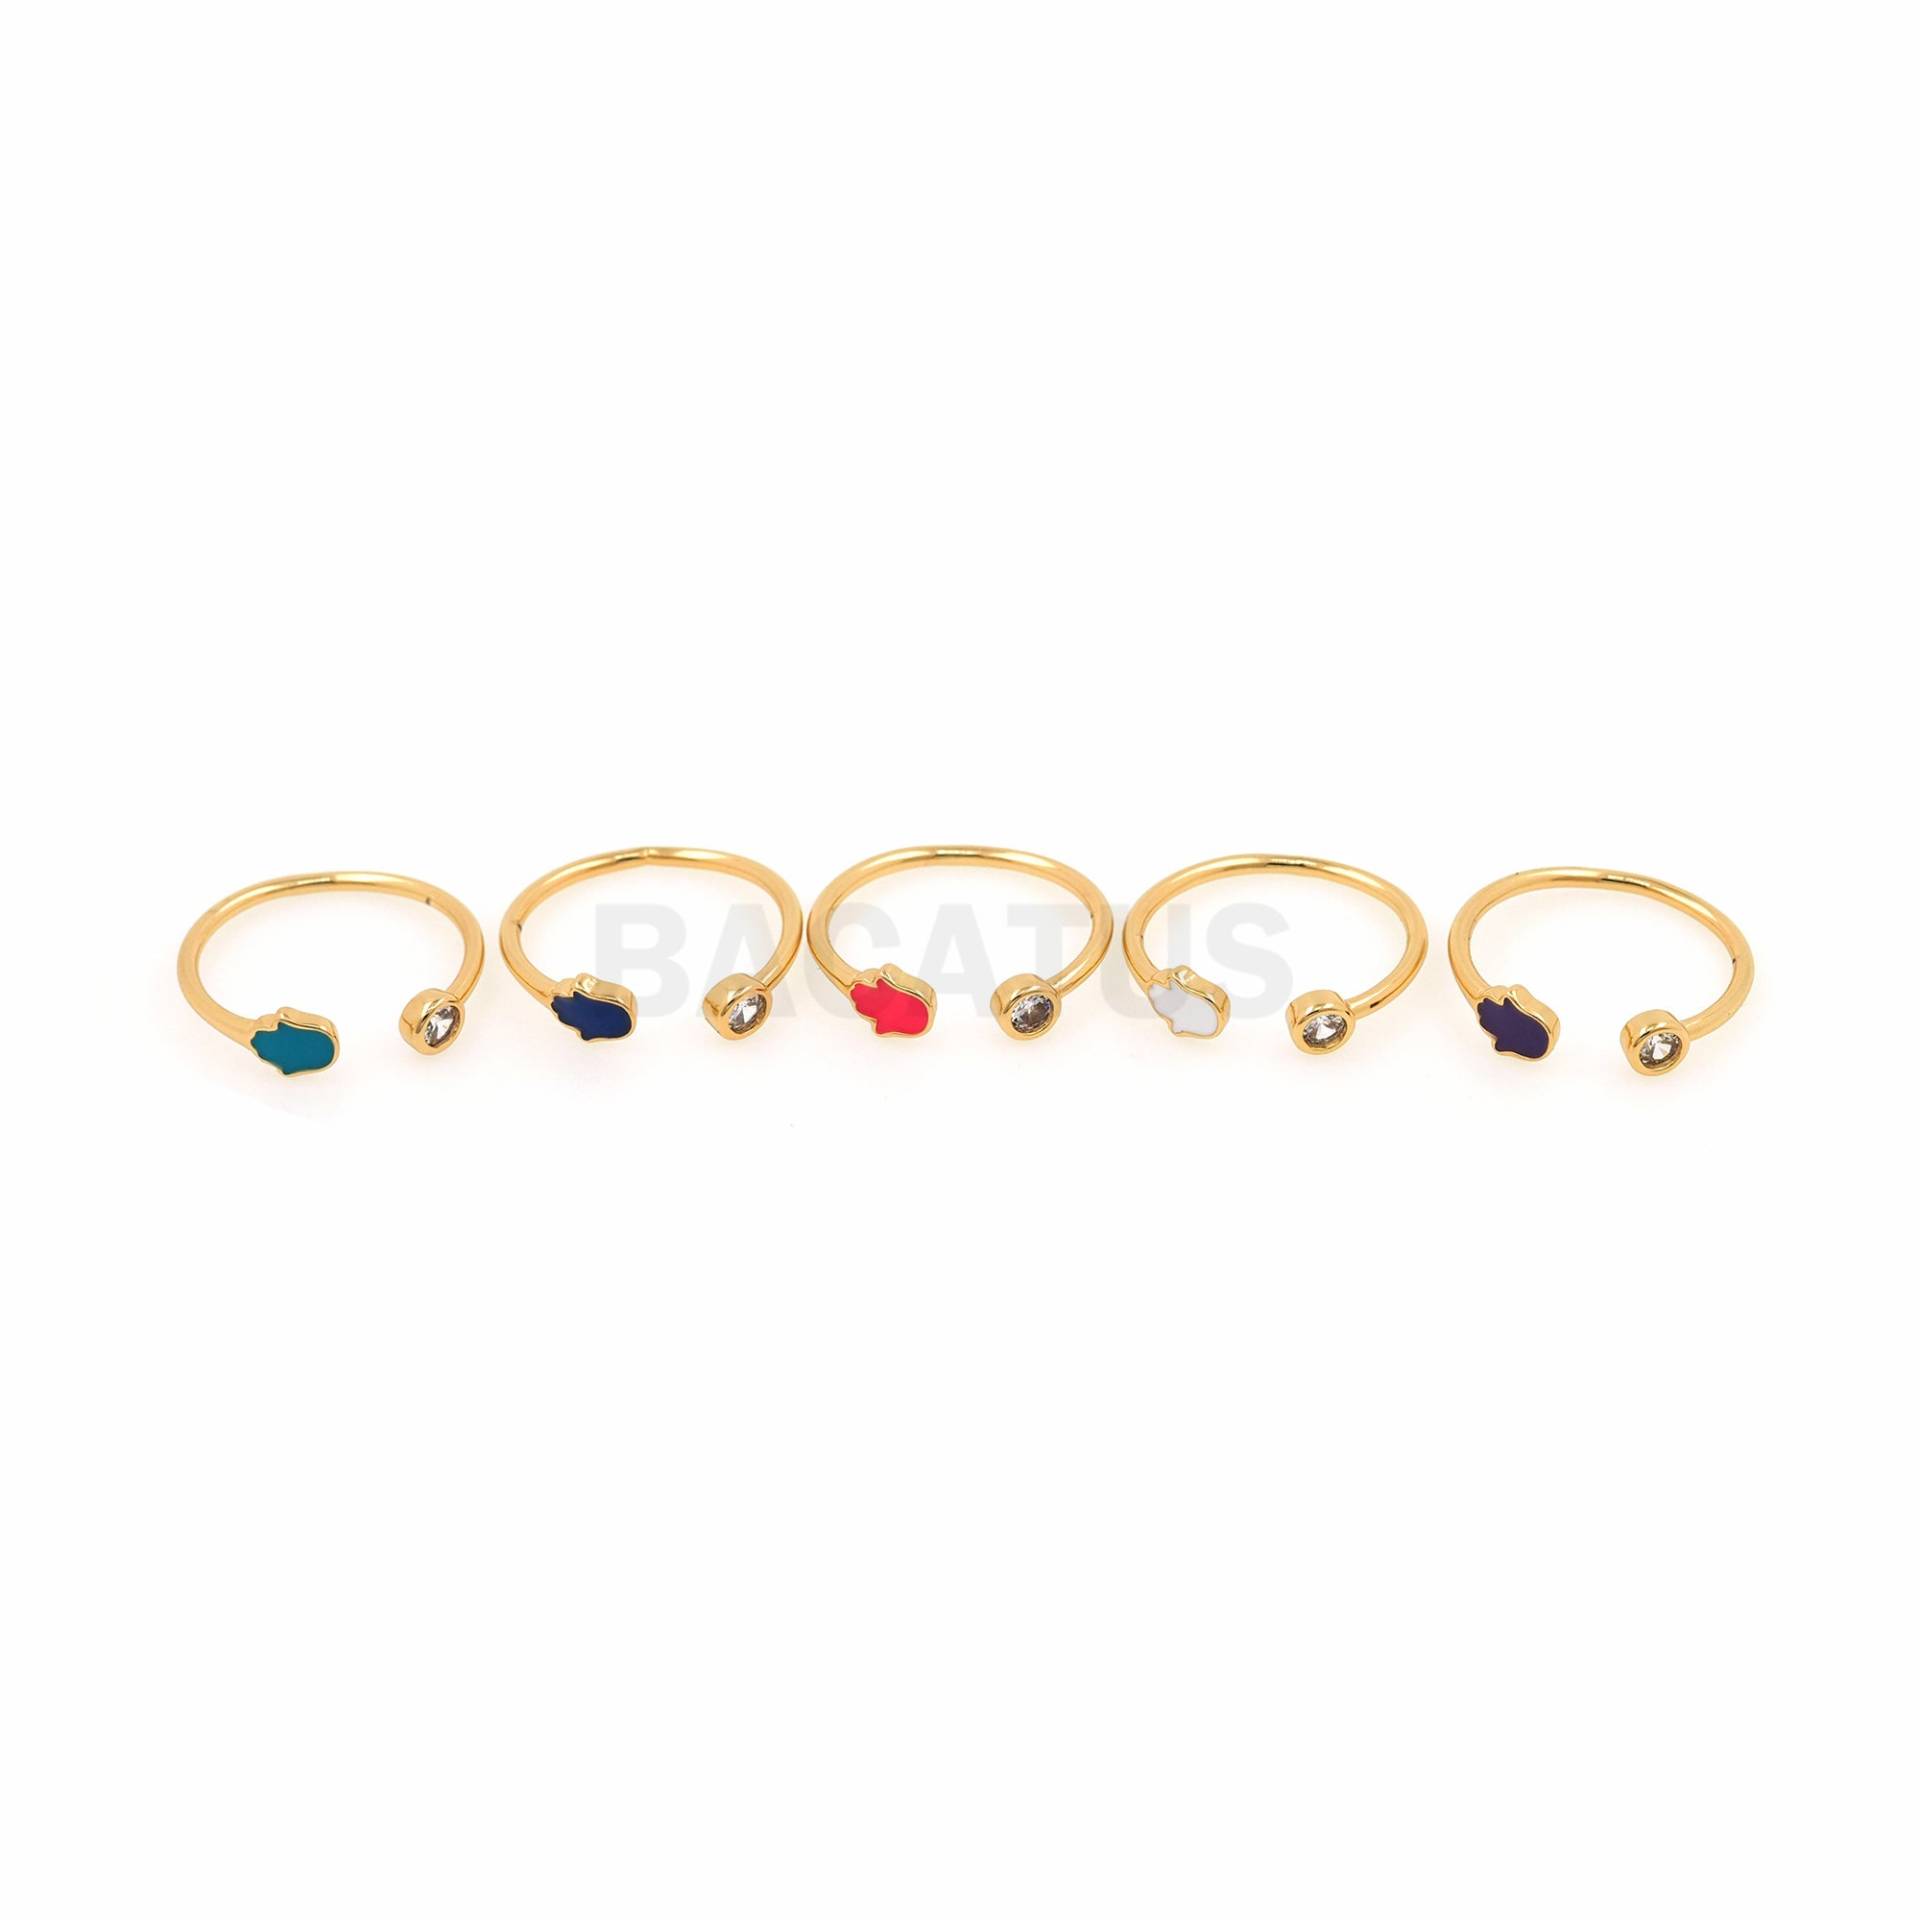 Signet Ring, 18K Gold Filled Slap Micropavé Cz Hamsa Emaille Charm, Verstellbarer Offener Ring von BACATUSCR